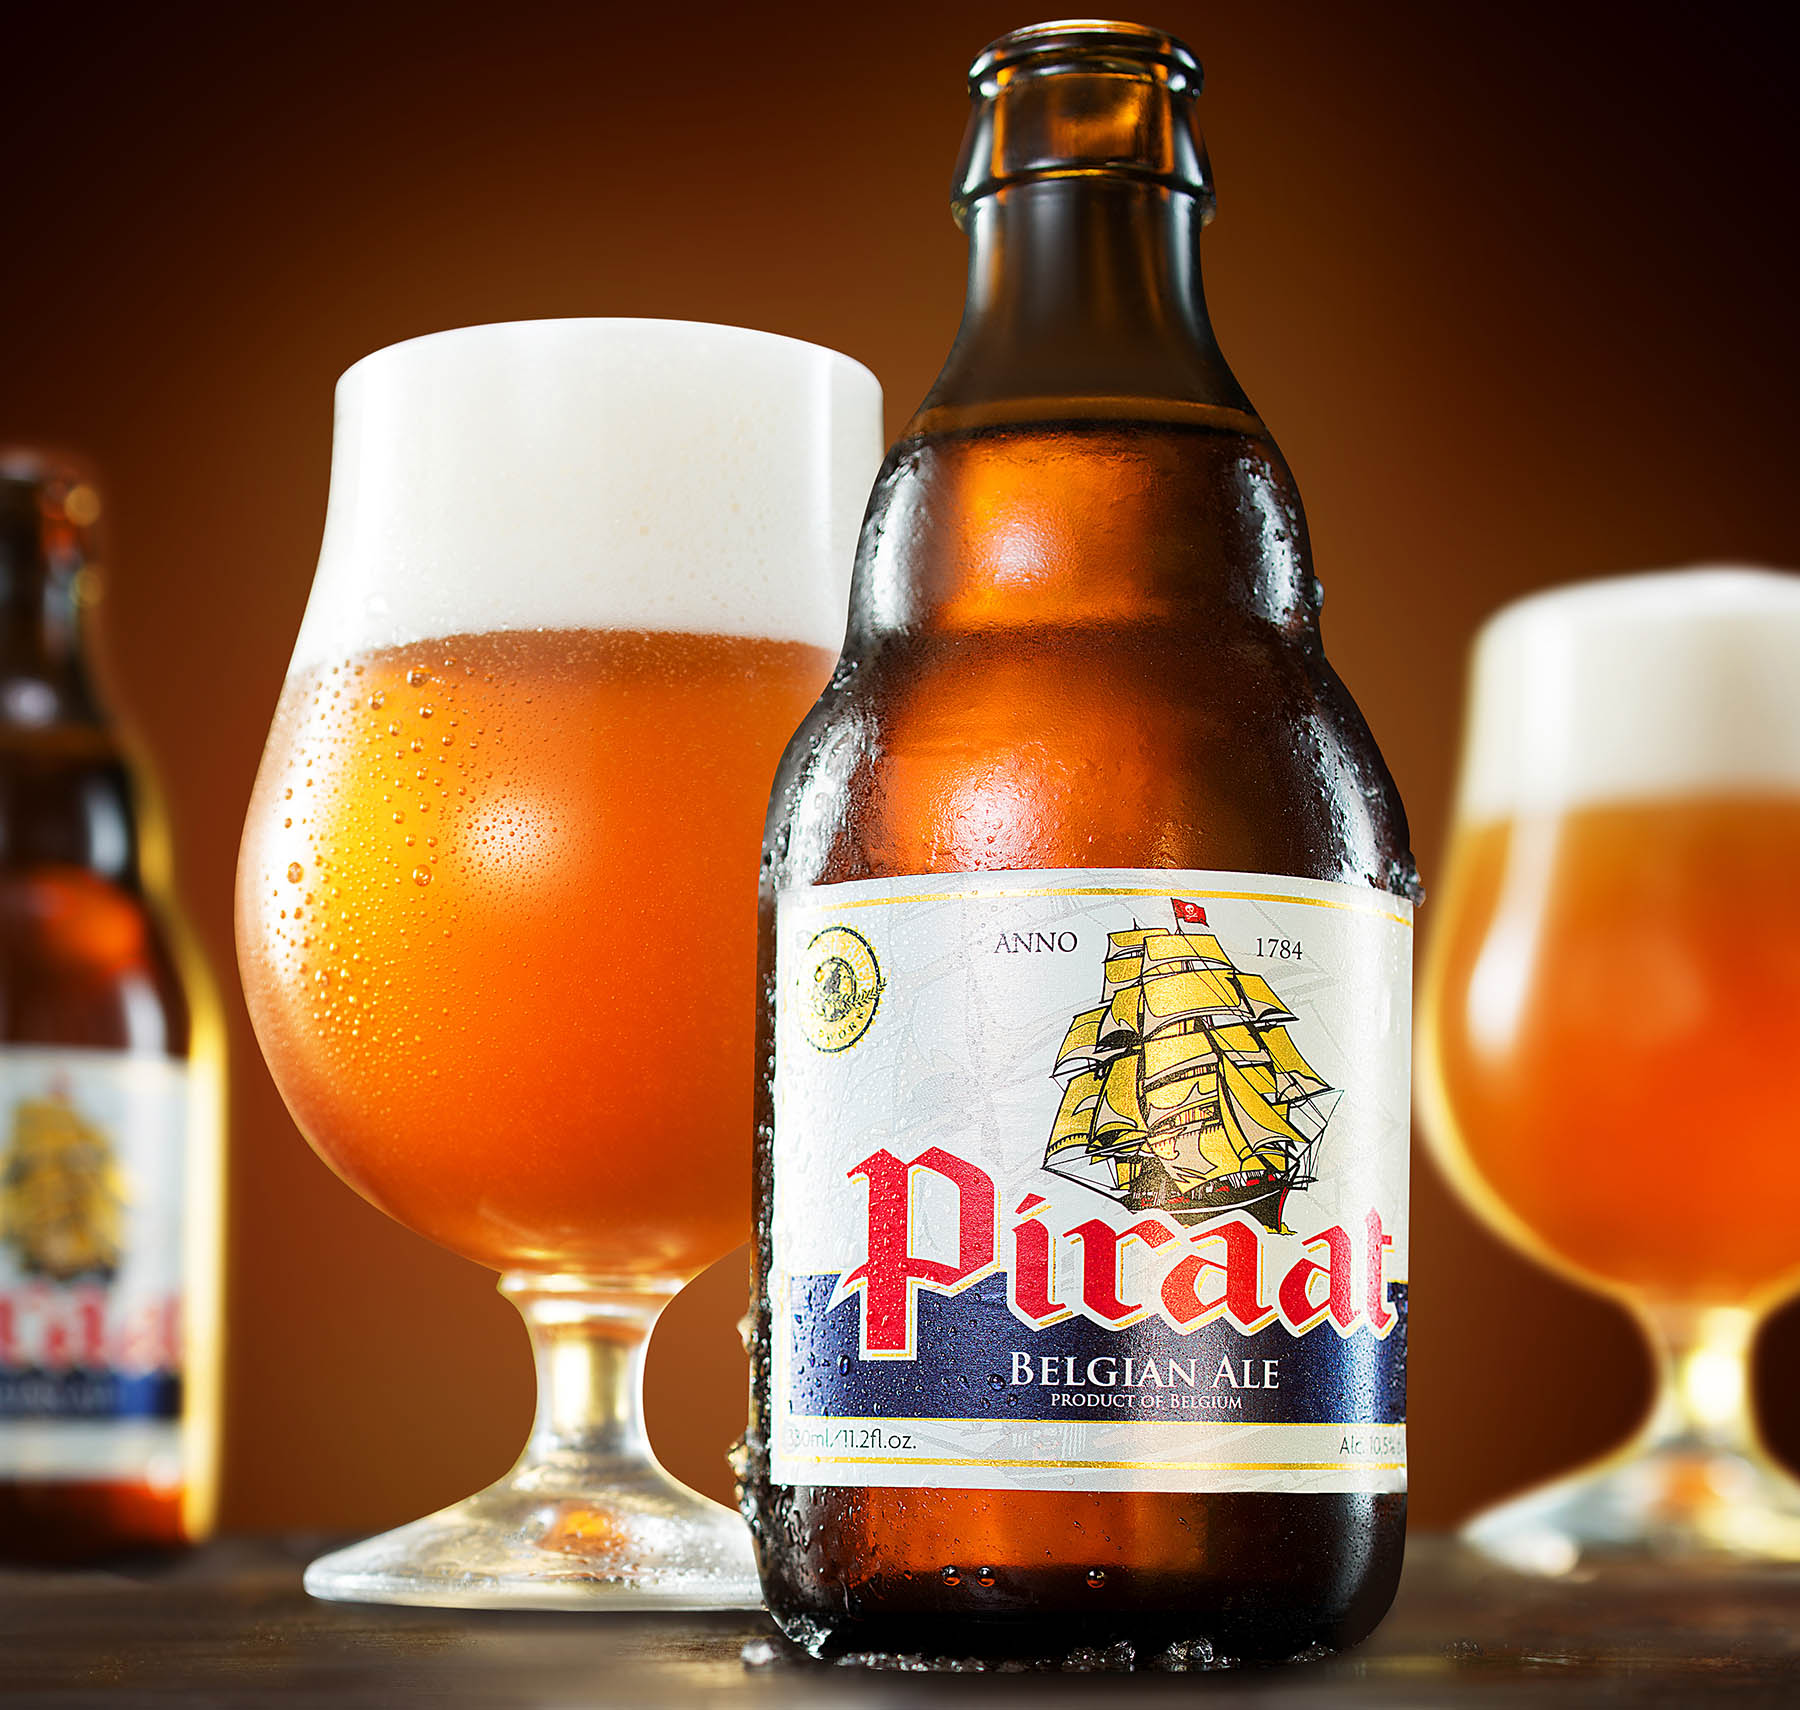 New-york-beverage-phtography-still-life-phtographer-Piraaat-beer